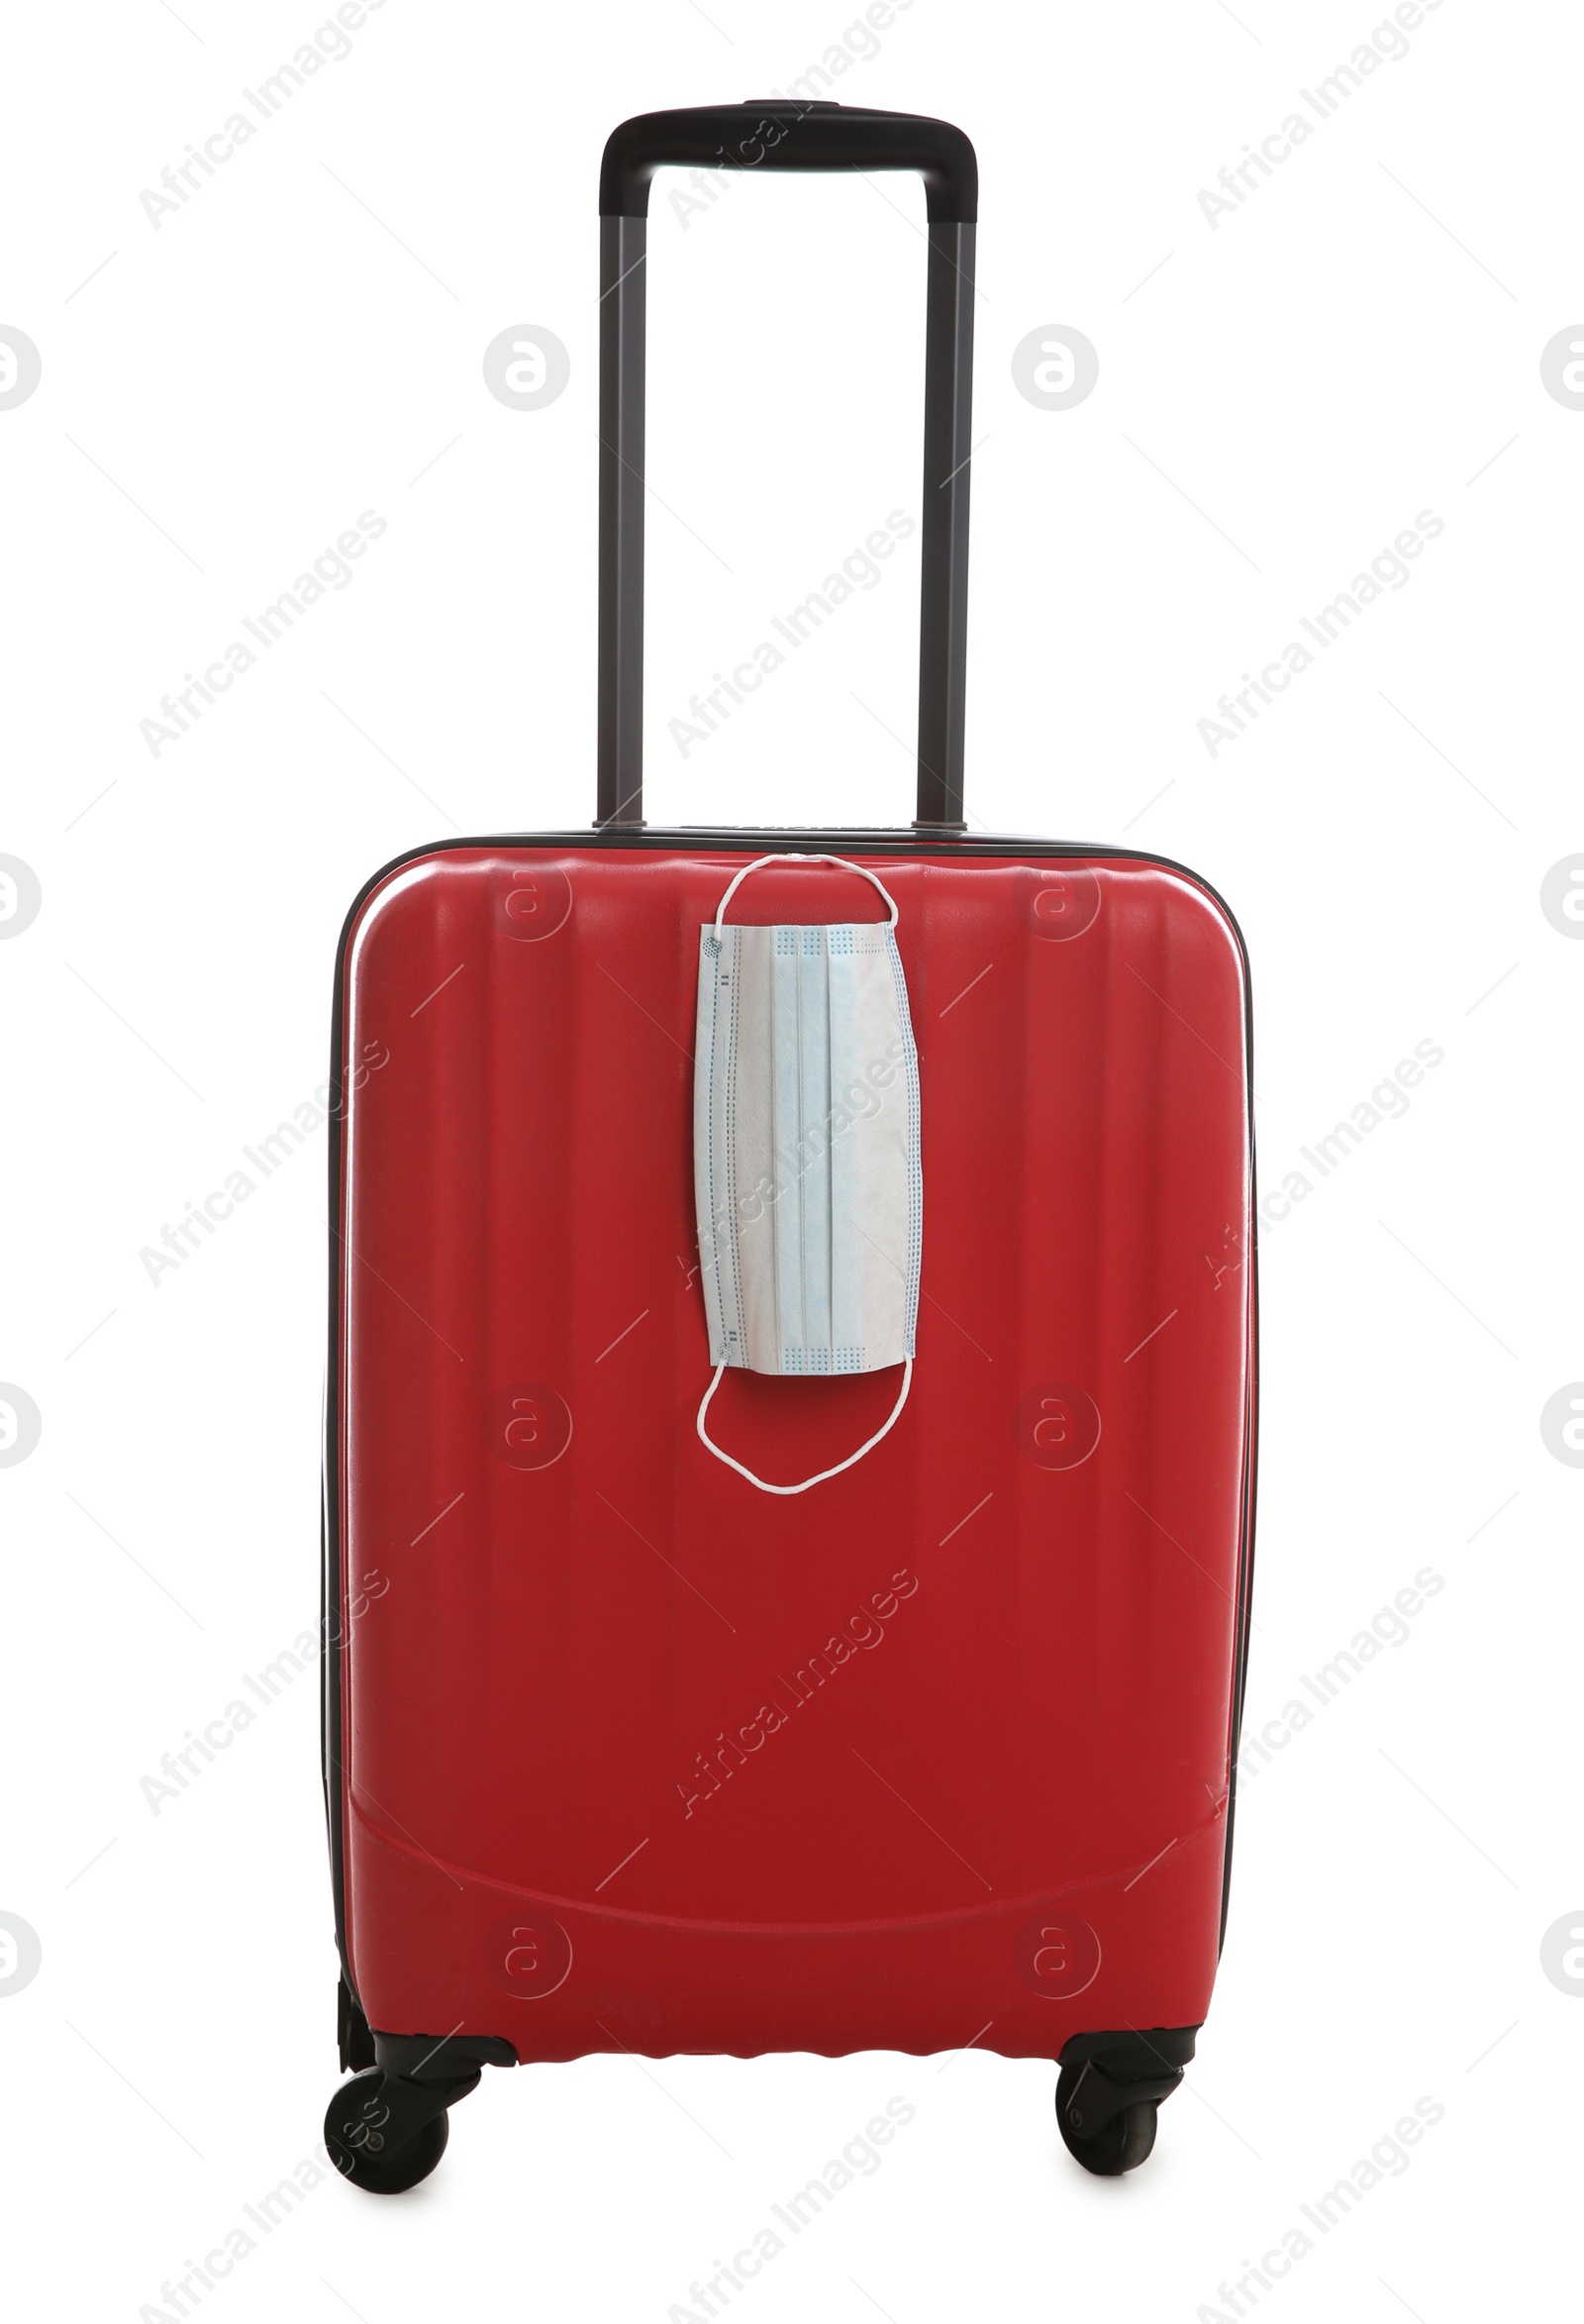 Photo of Stylish red suitcase and protective mask on white background. Travelling during coronavirus pandemic